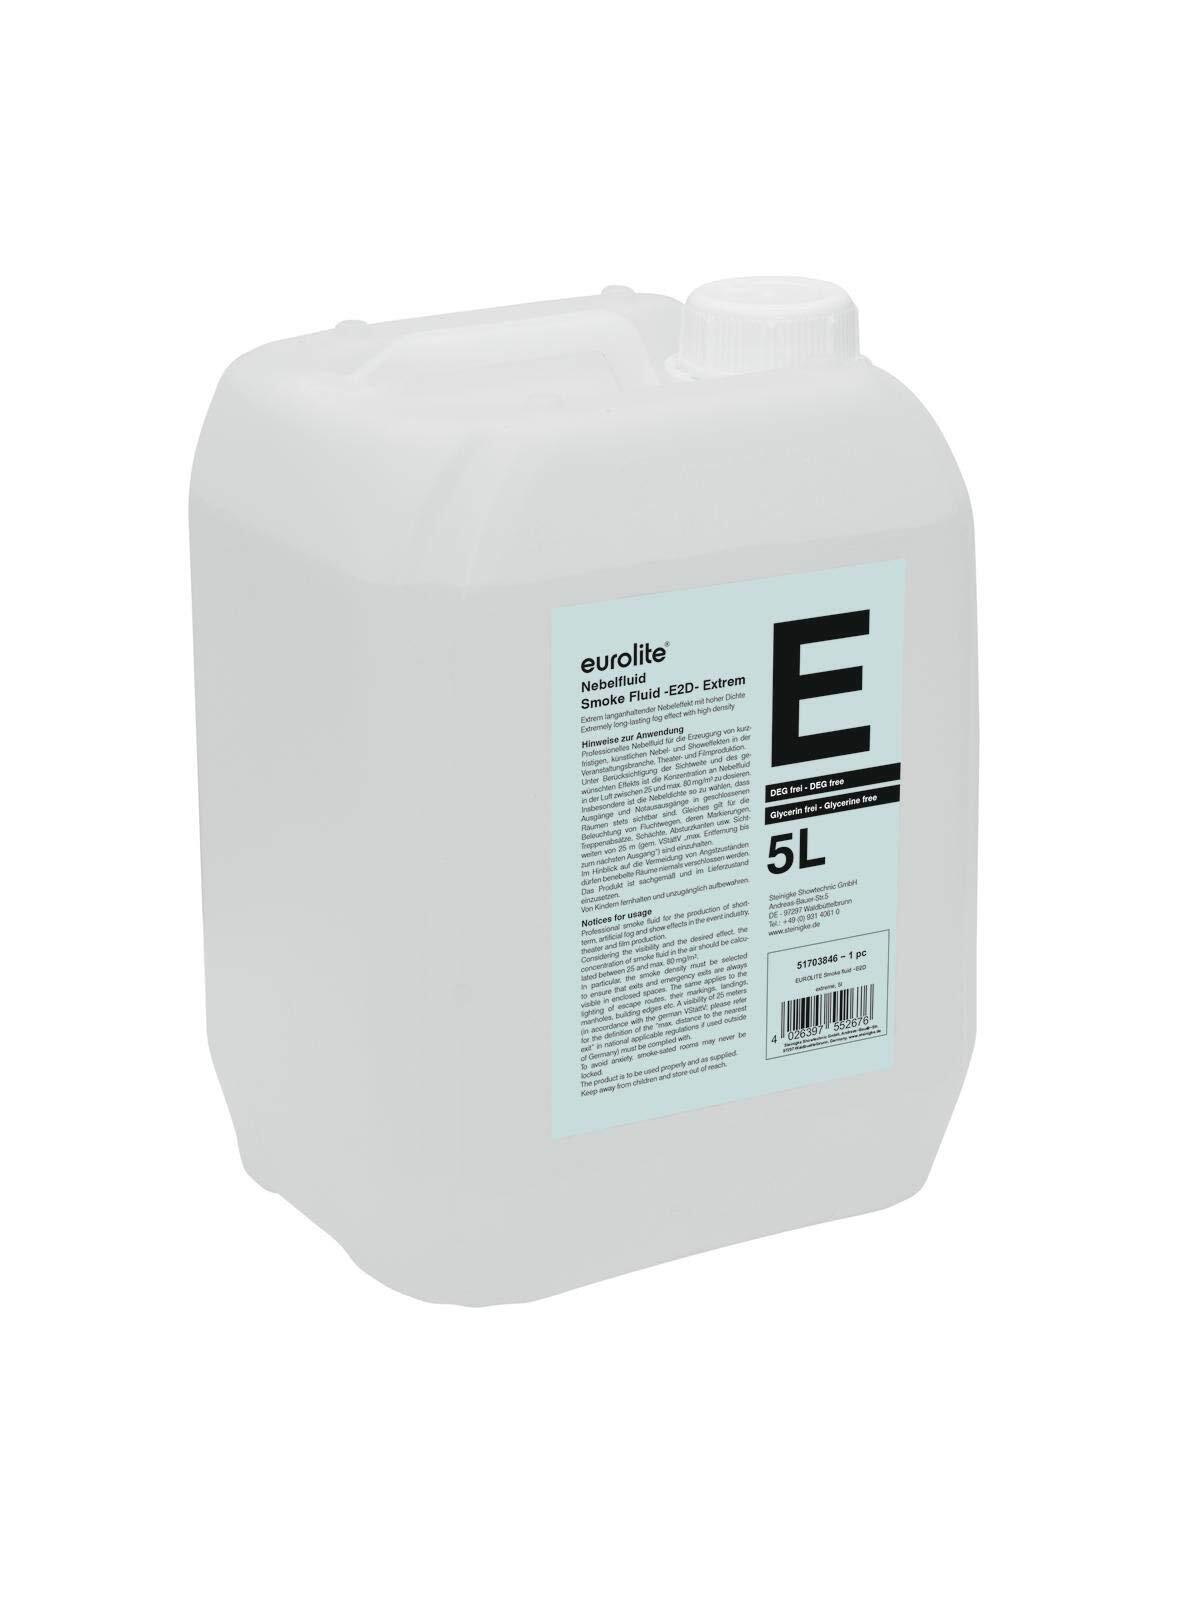 EUROLITE rookvloeistof voor rookmachine -E2D- extreme 5l